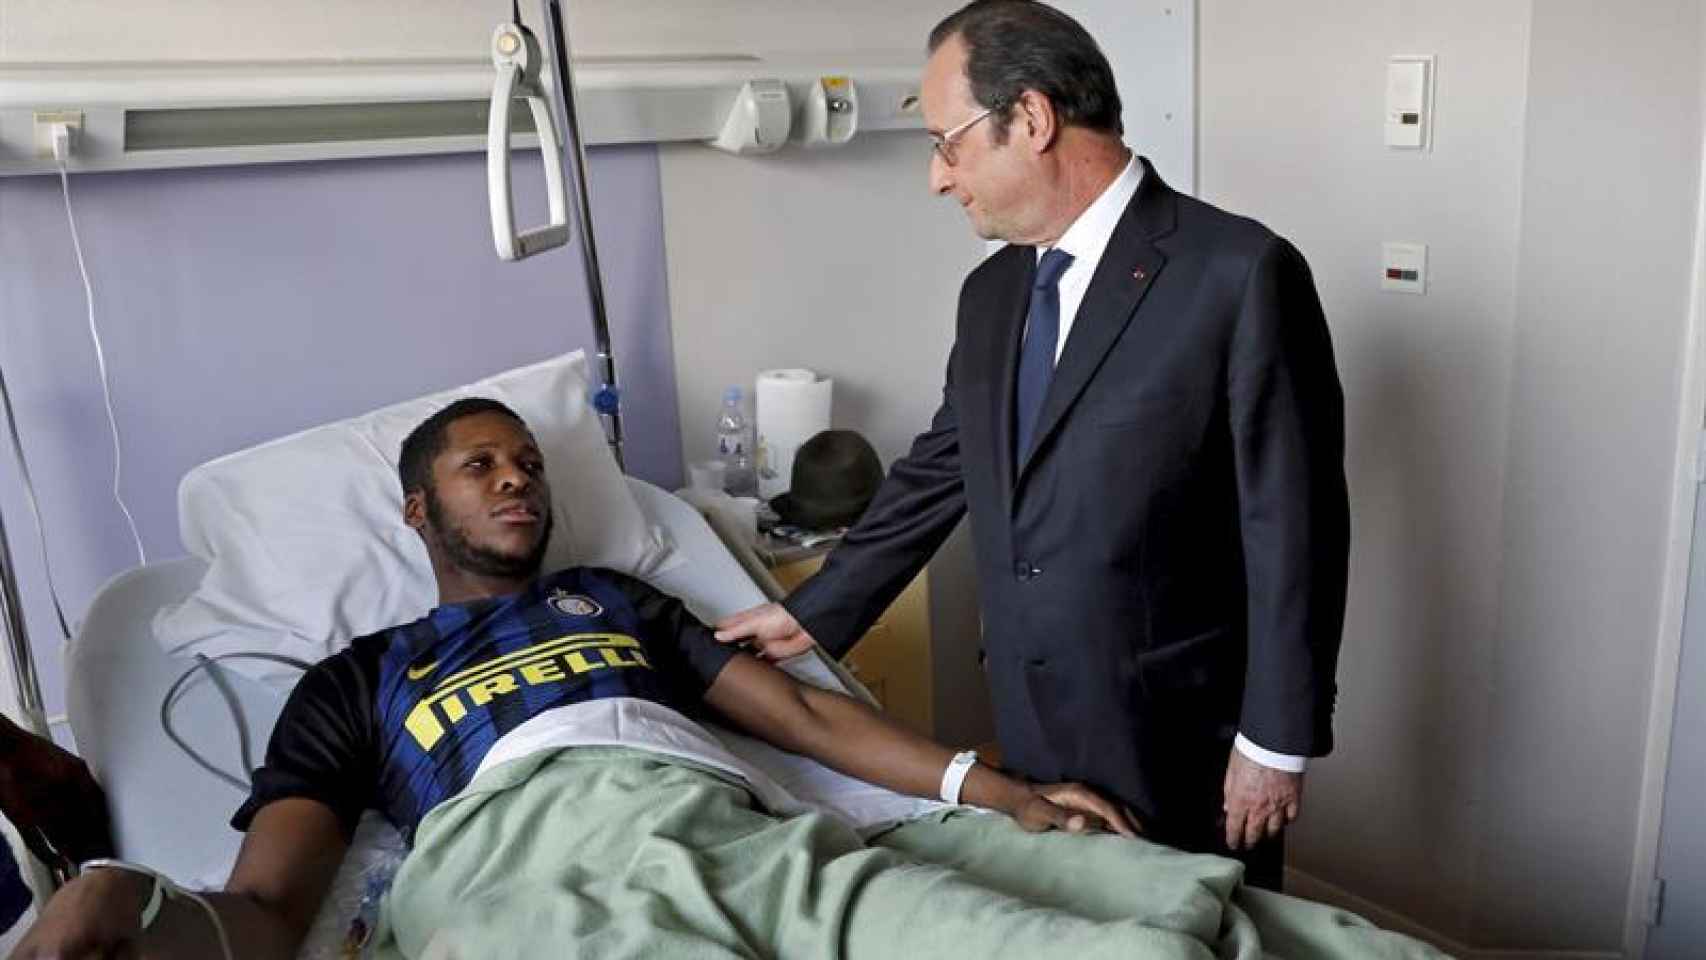 Hollande visitó a Théo L. en el hospital el 8 de febrero para mostrar su apoyo a la víctima.